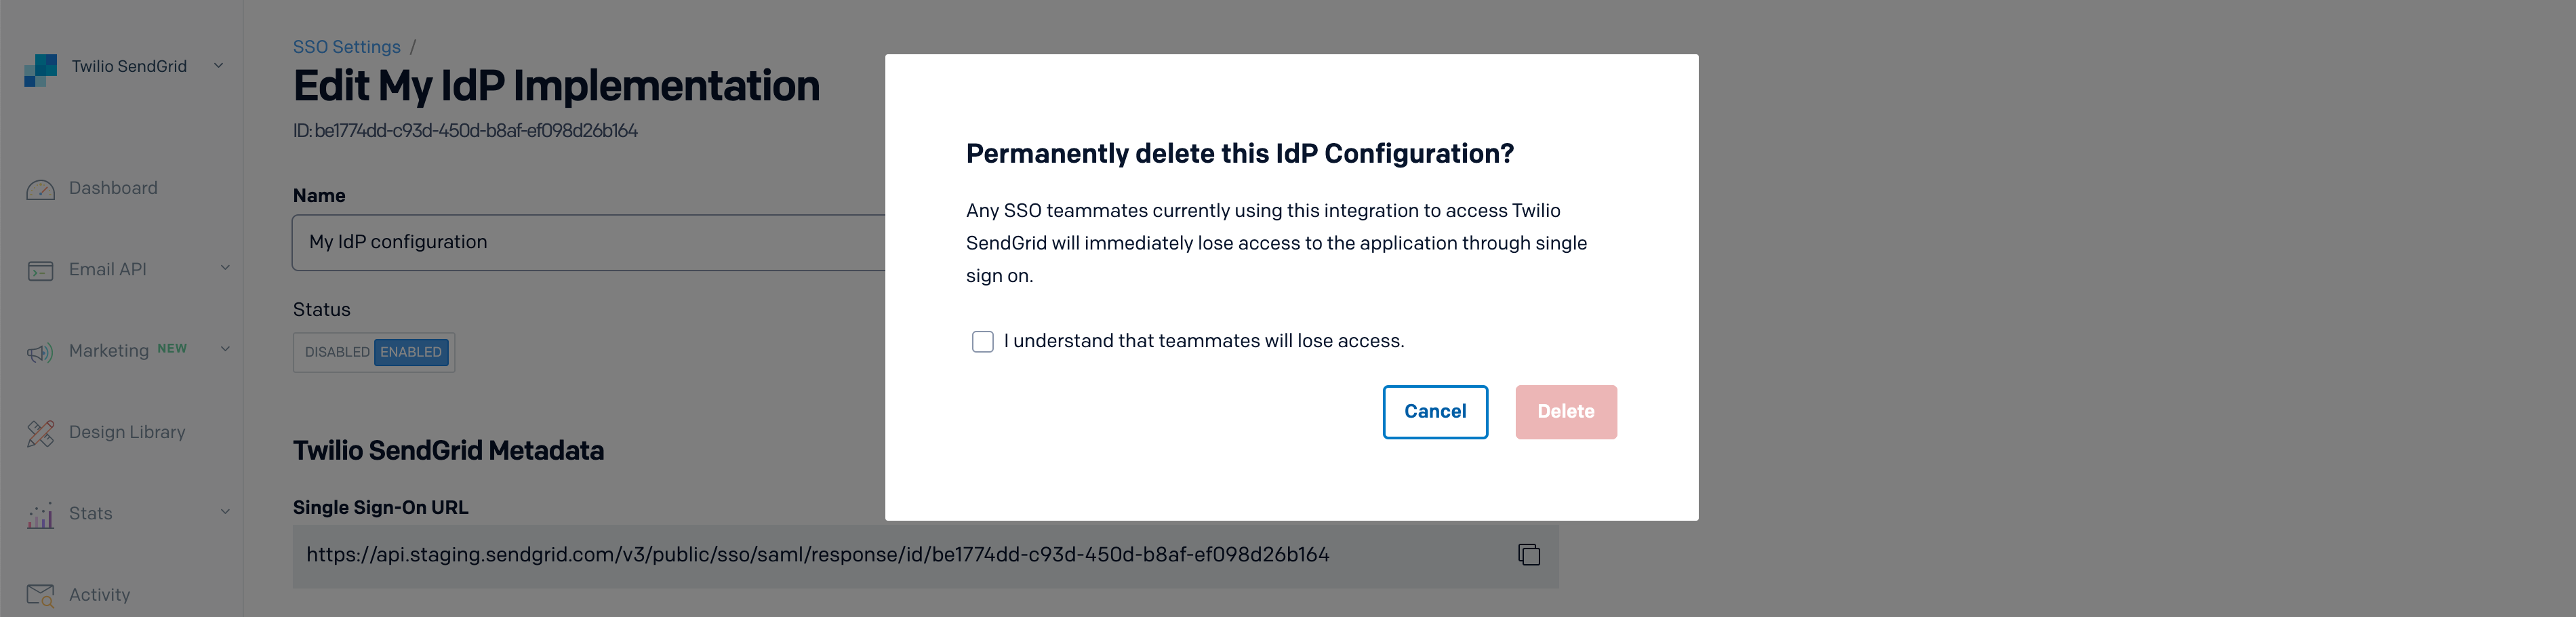 Permanently delete a Twilio SendGrid IdP configuration.